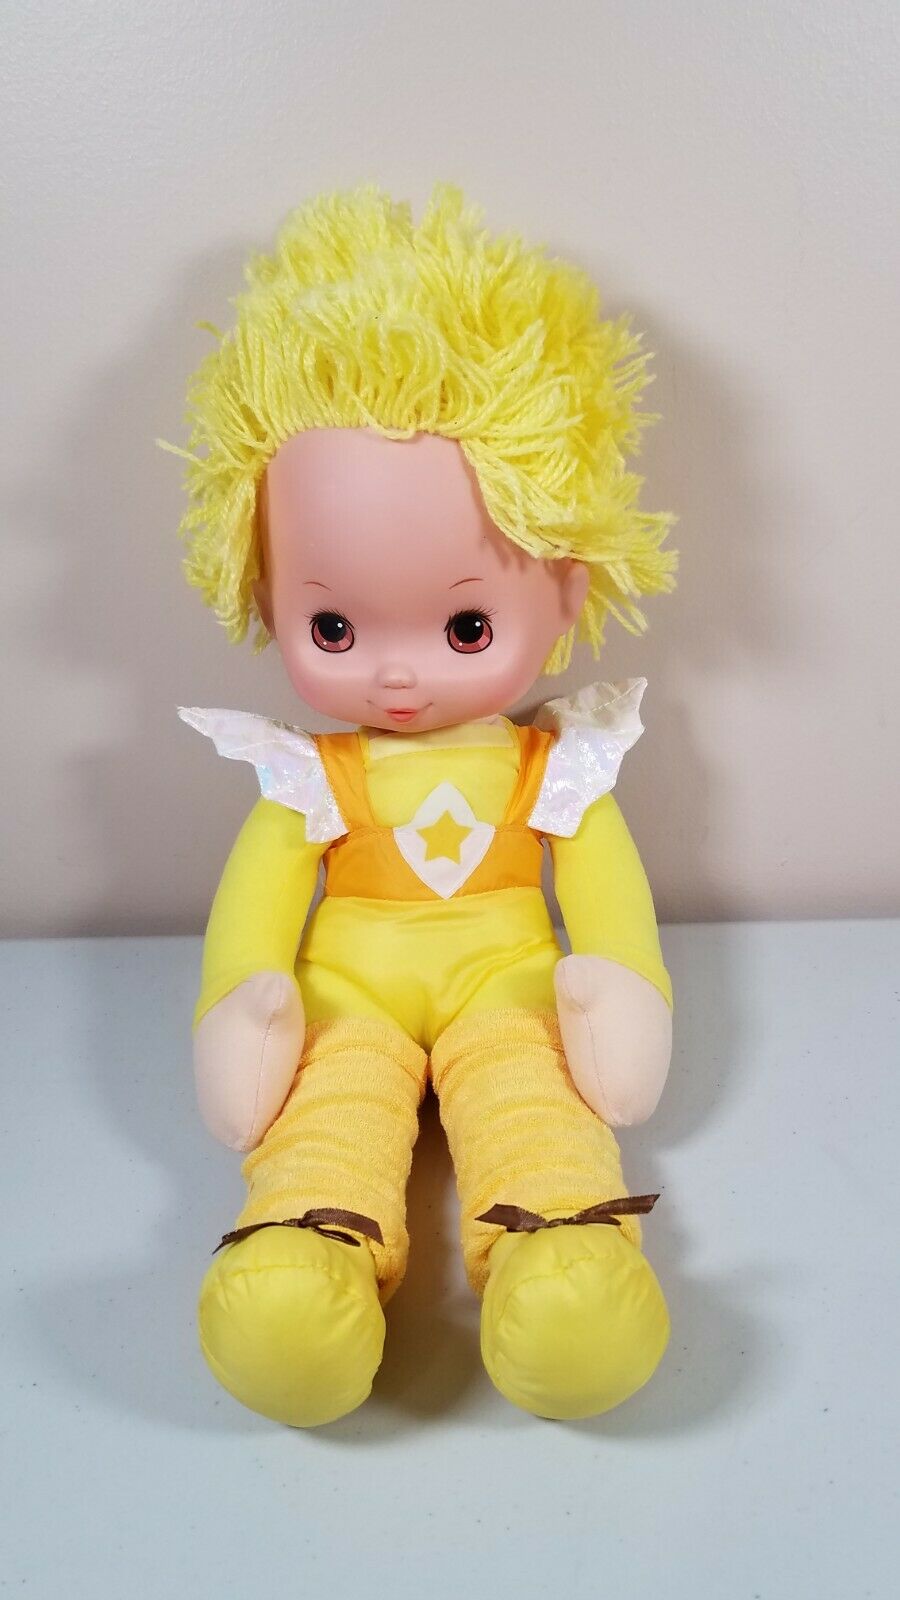 2003 Hallmark Toy Play Canary Yellow Rainbow Brite Doll 17"